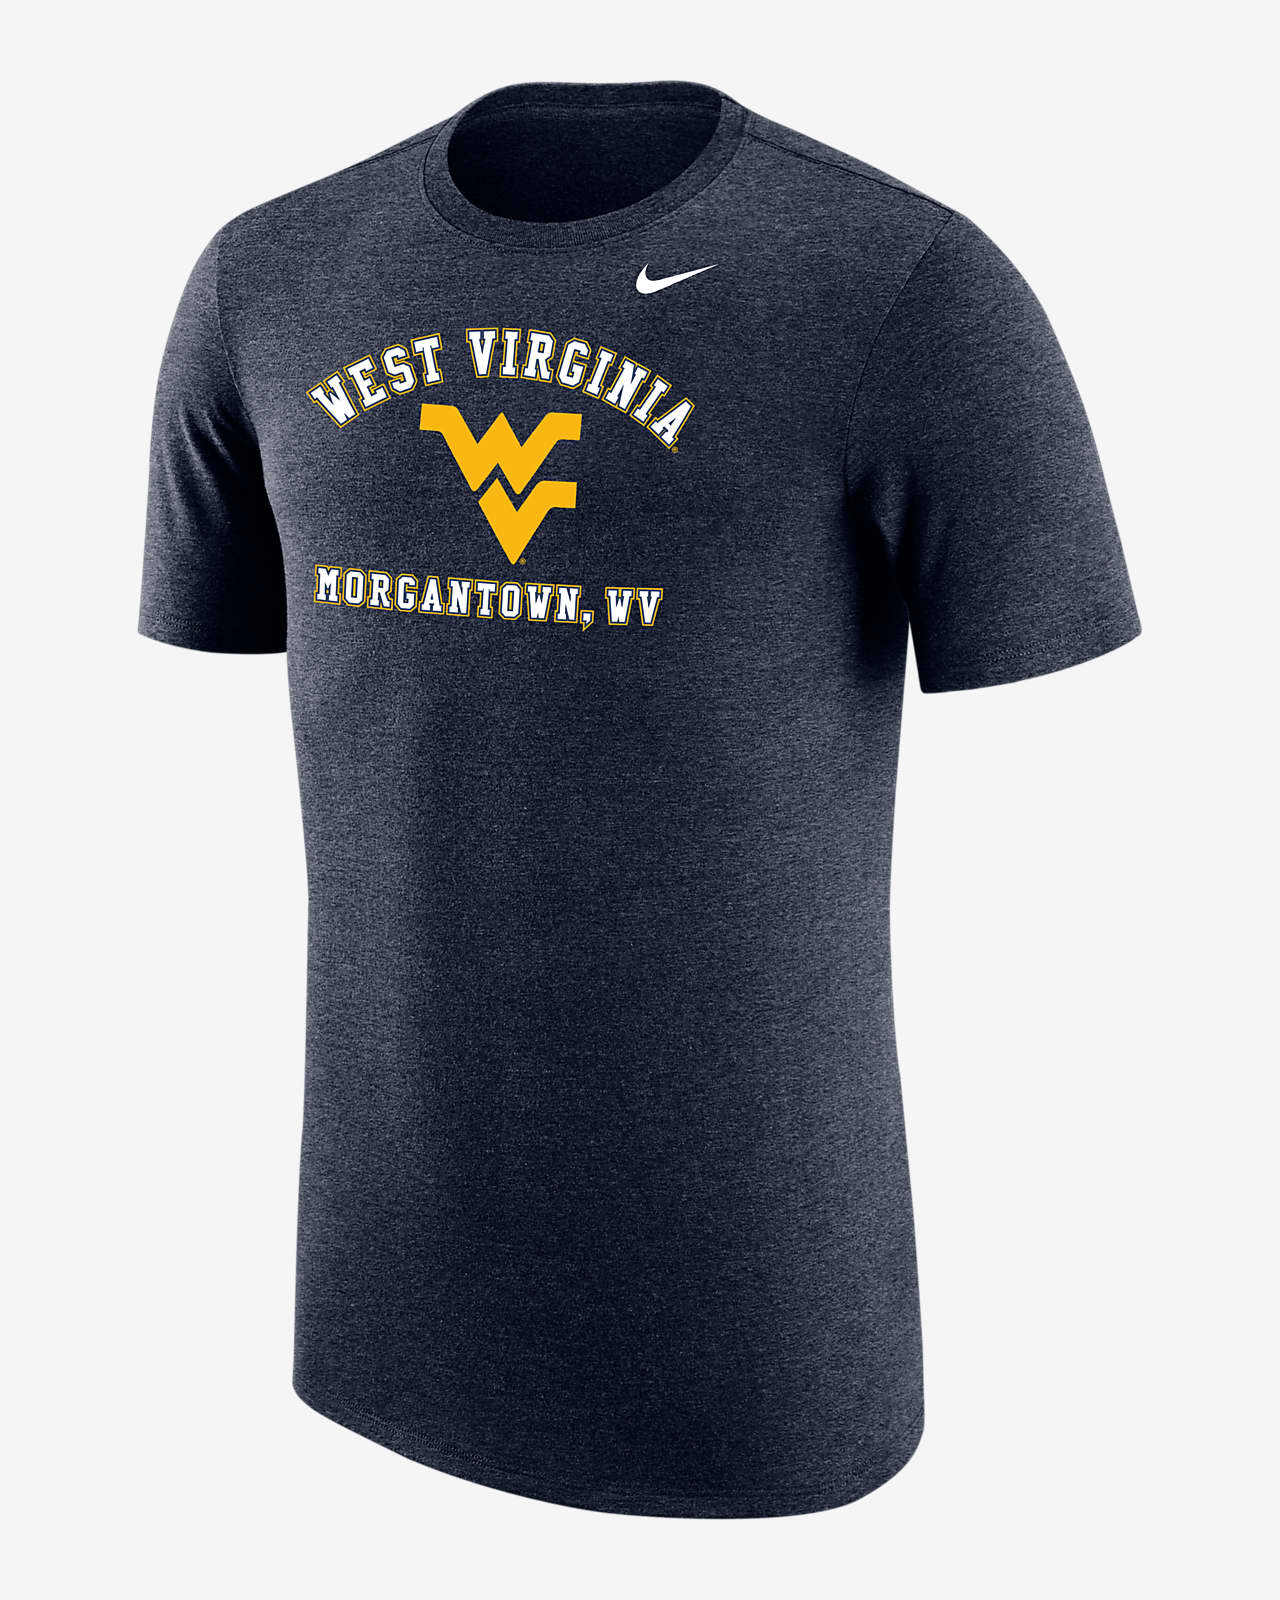 Playera Nike College para hombre West Virginia